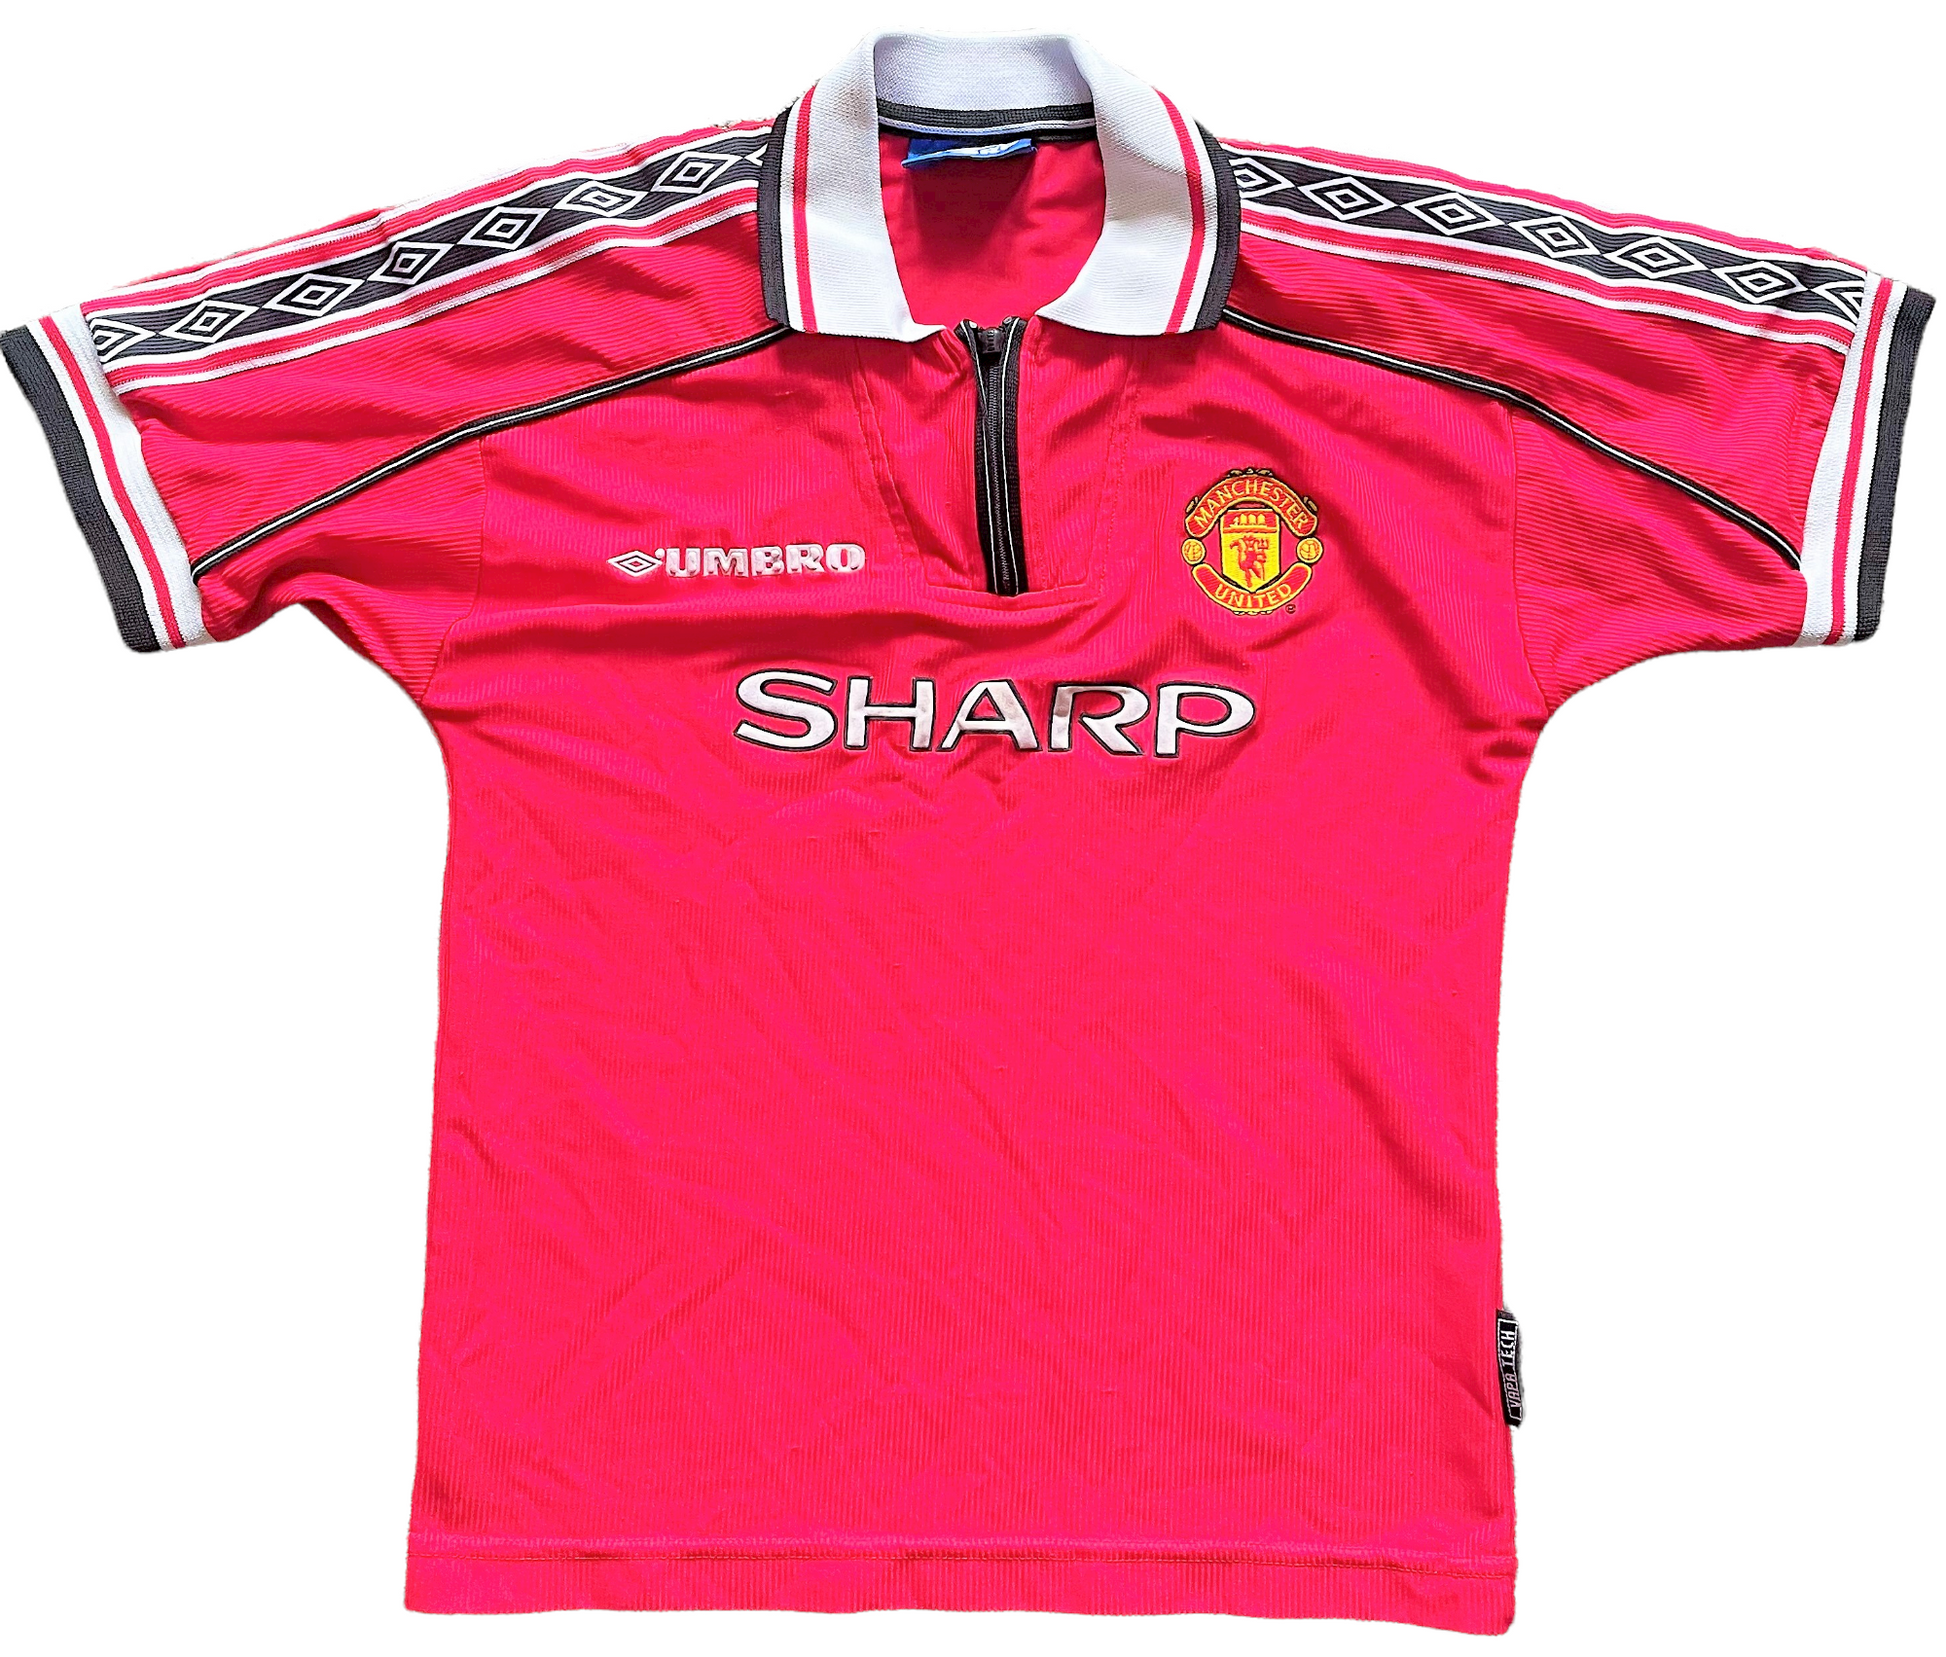 1998-2000 Man United Home shirt (very good). Childs 10-11